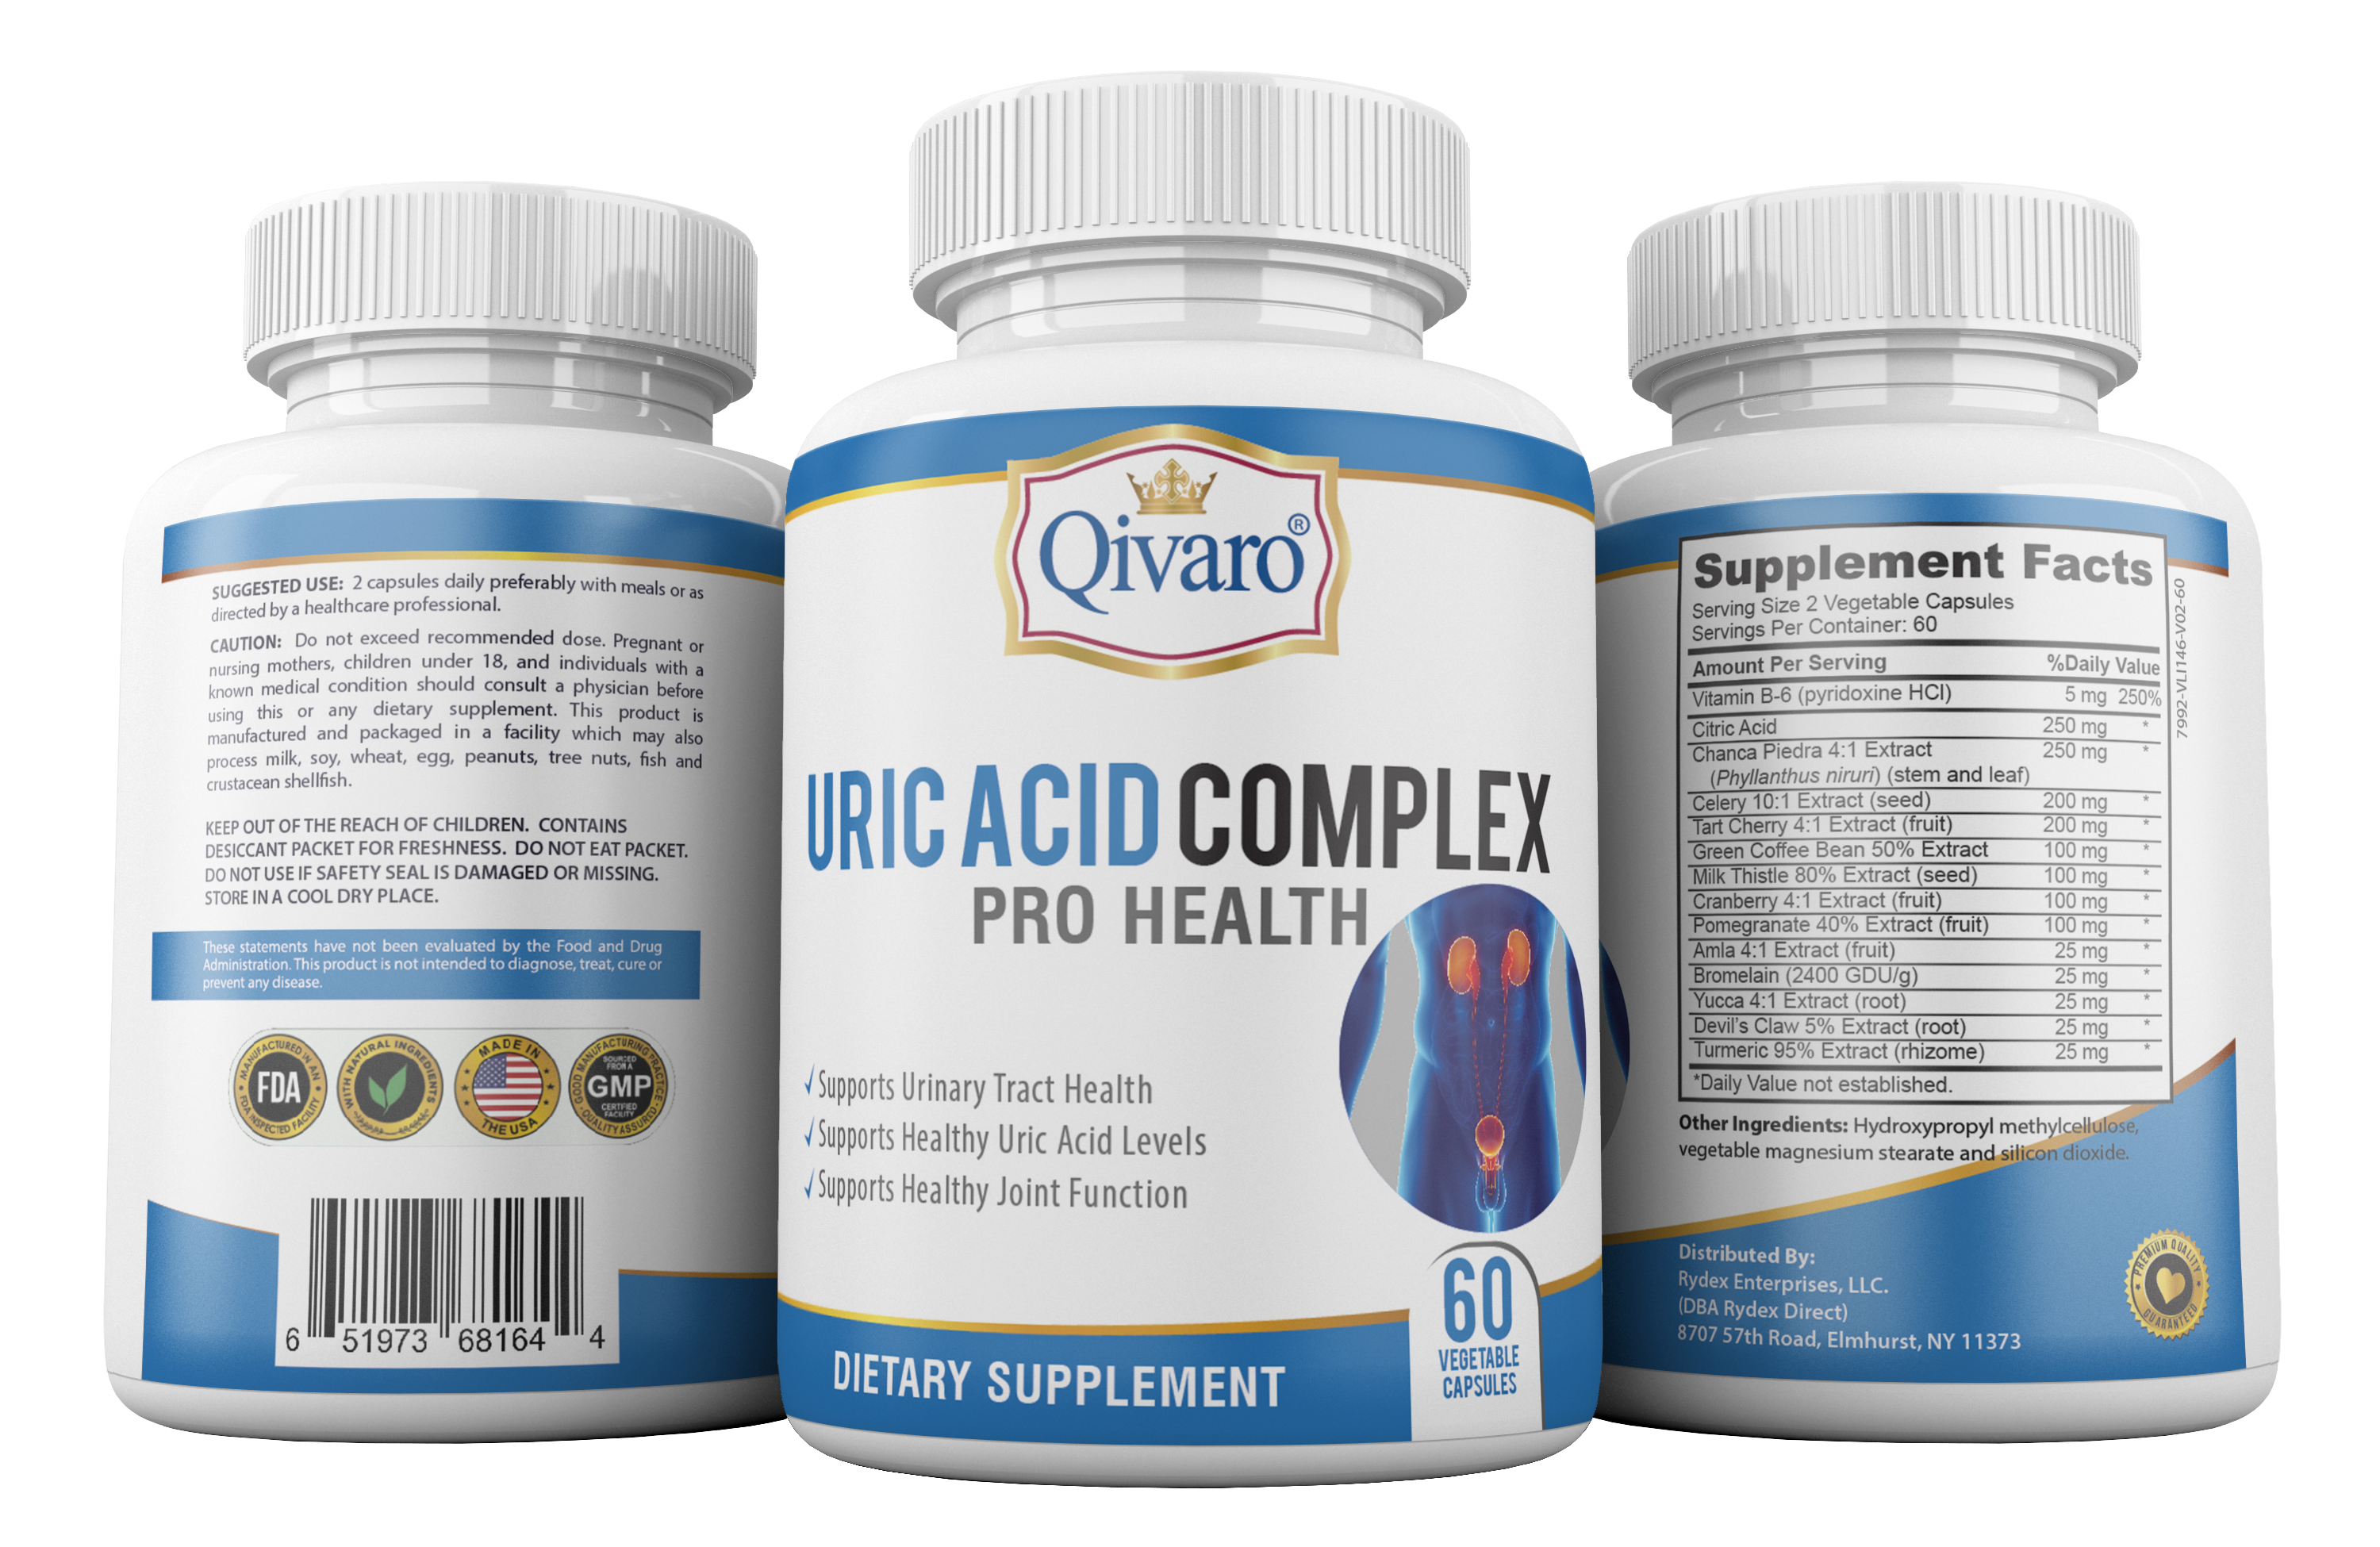 QIH17: Uric Acid Complex Pro Health